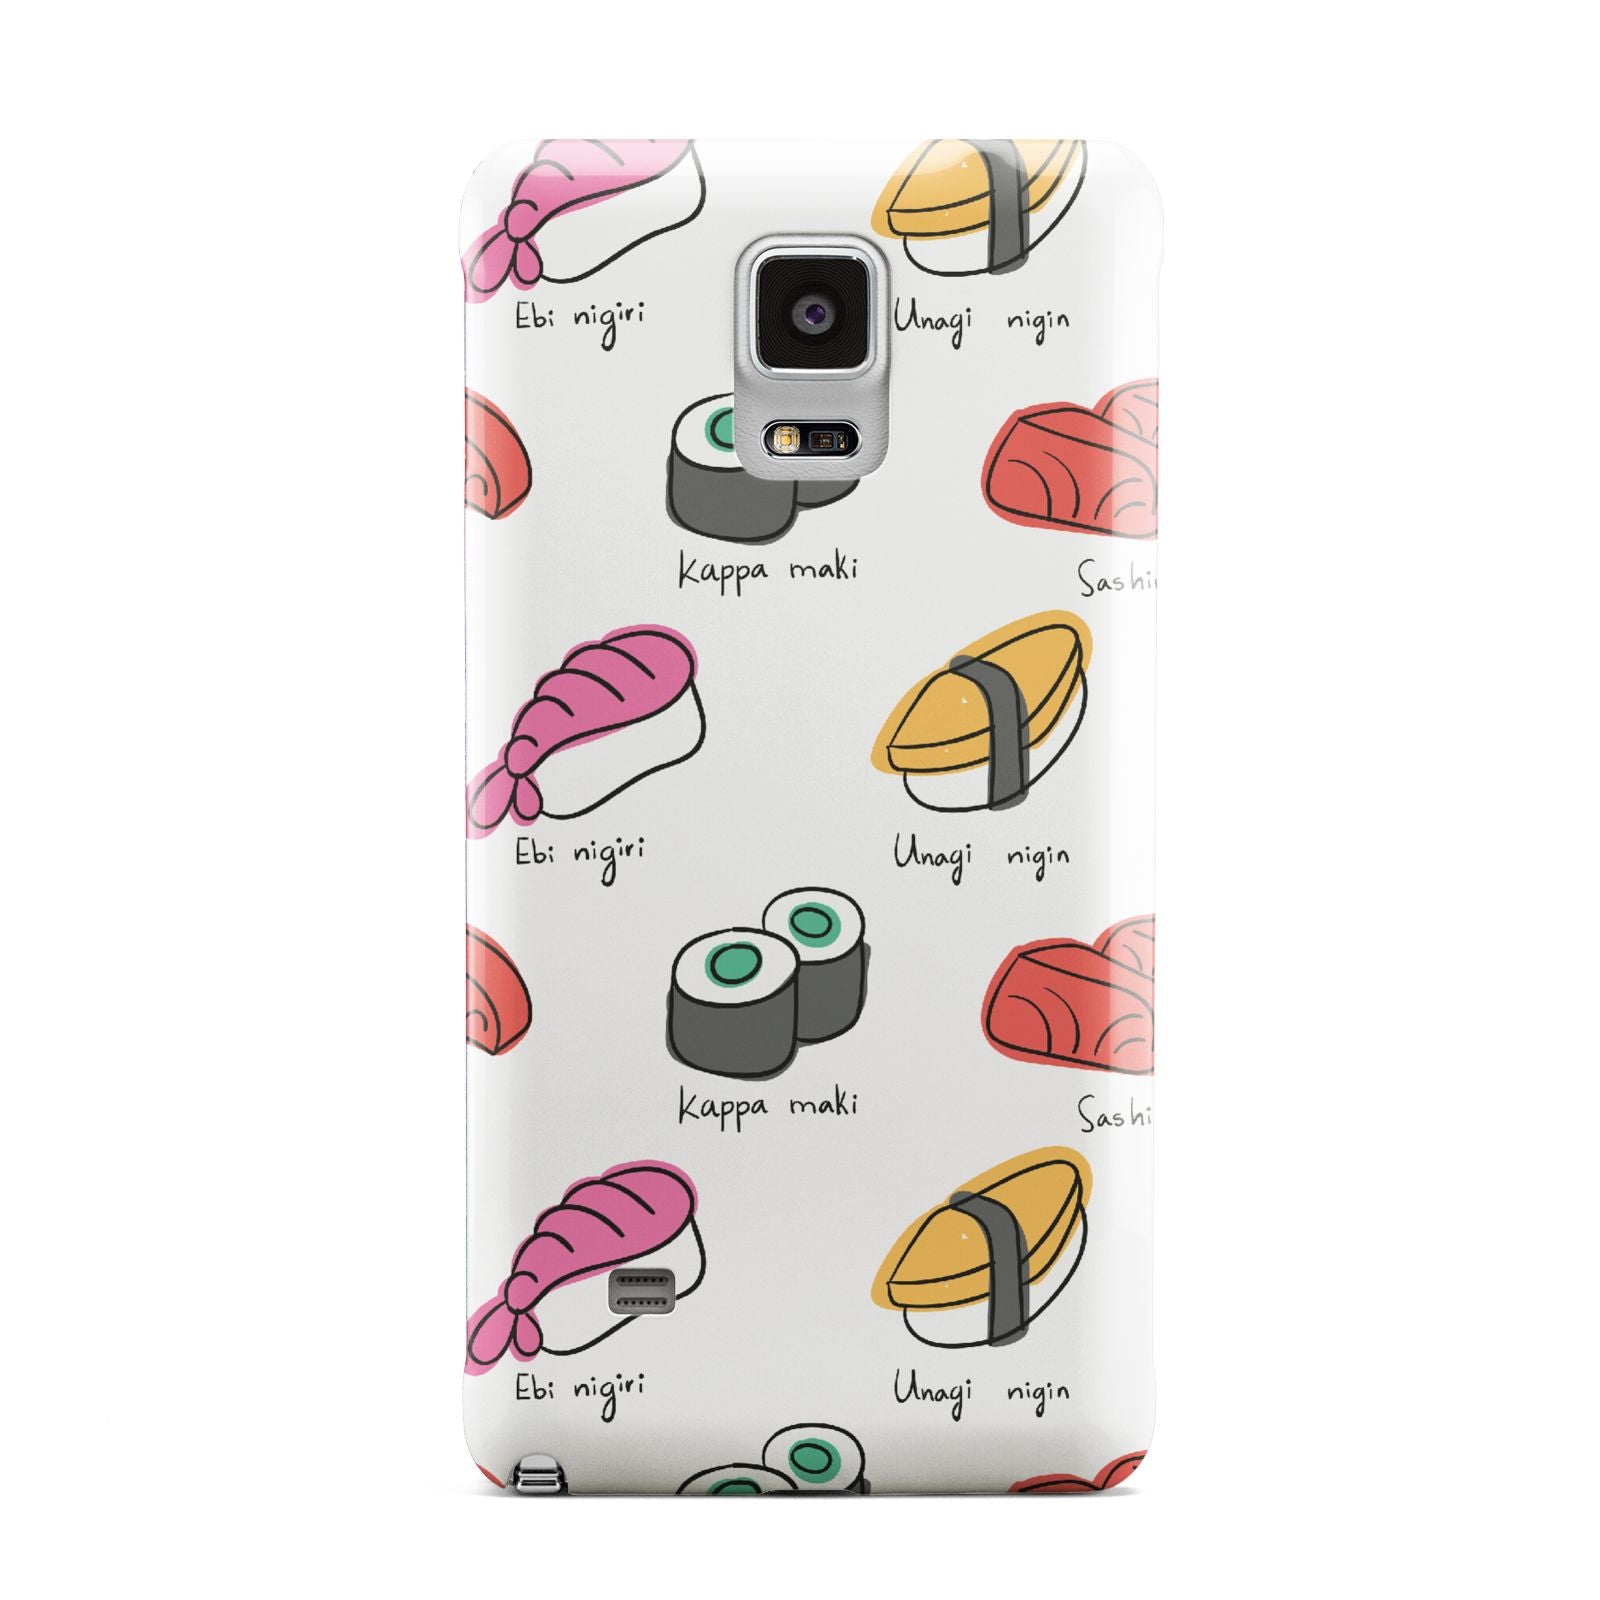 Sashimi Kappa Maki Sushi Samsung Galaxy Note 4 Case